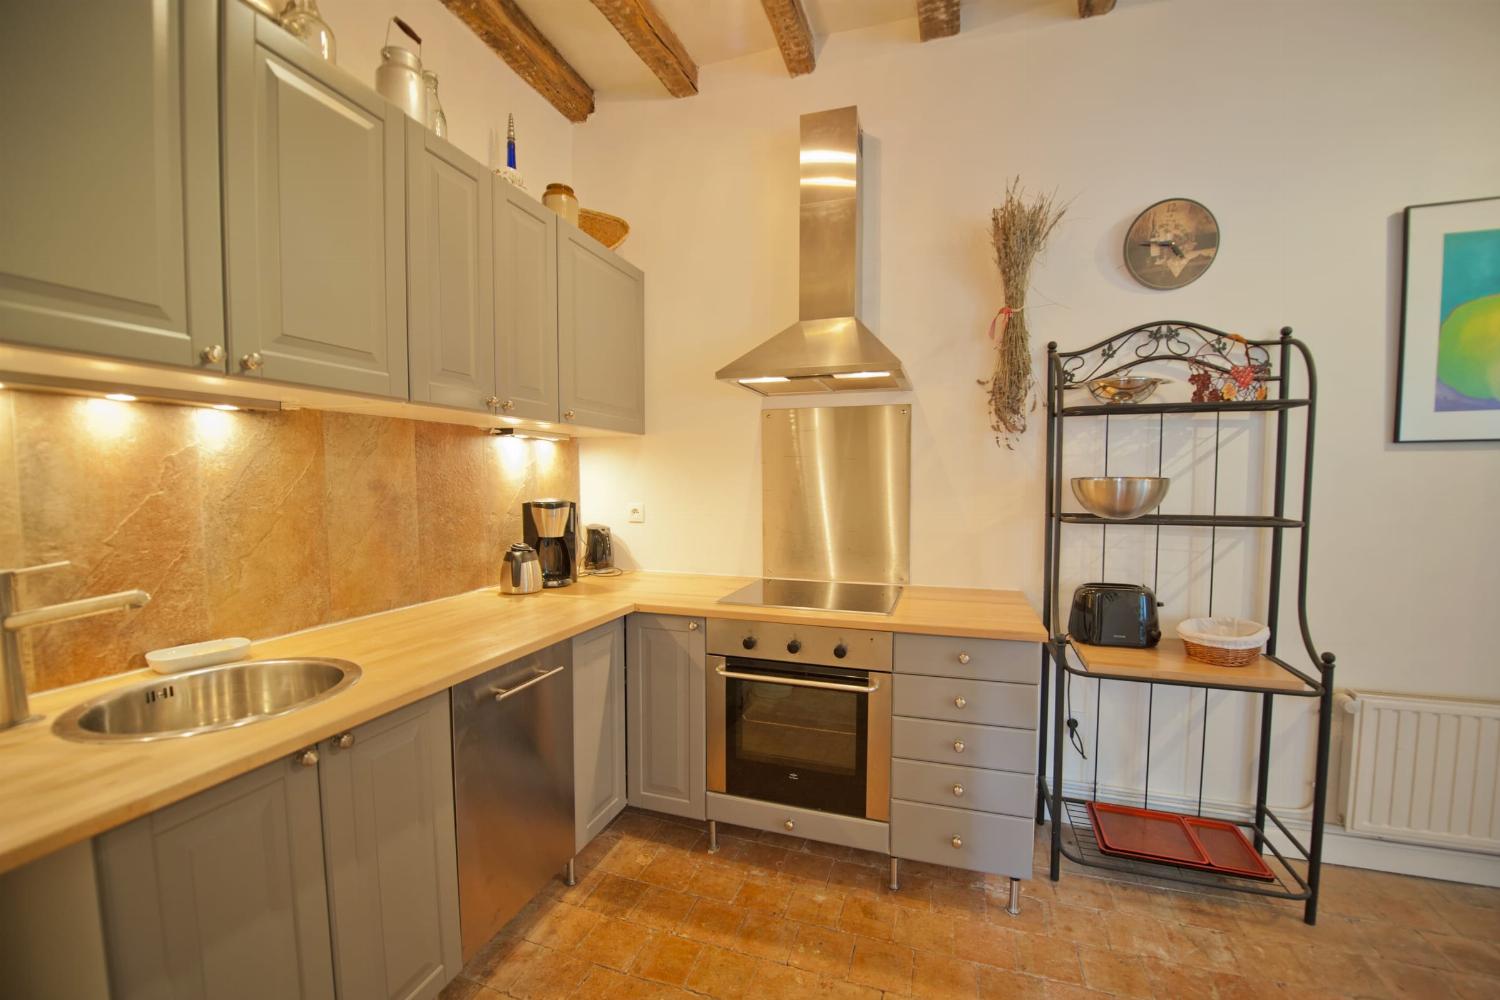 Kitchen | Rental home in Loire